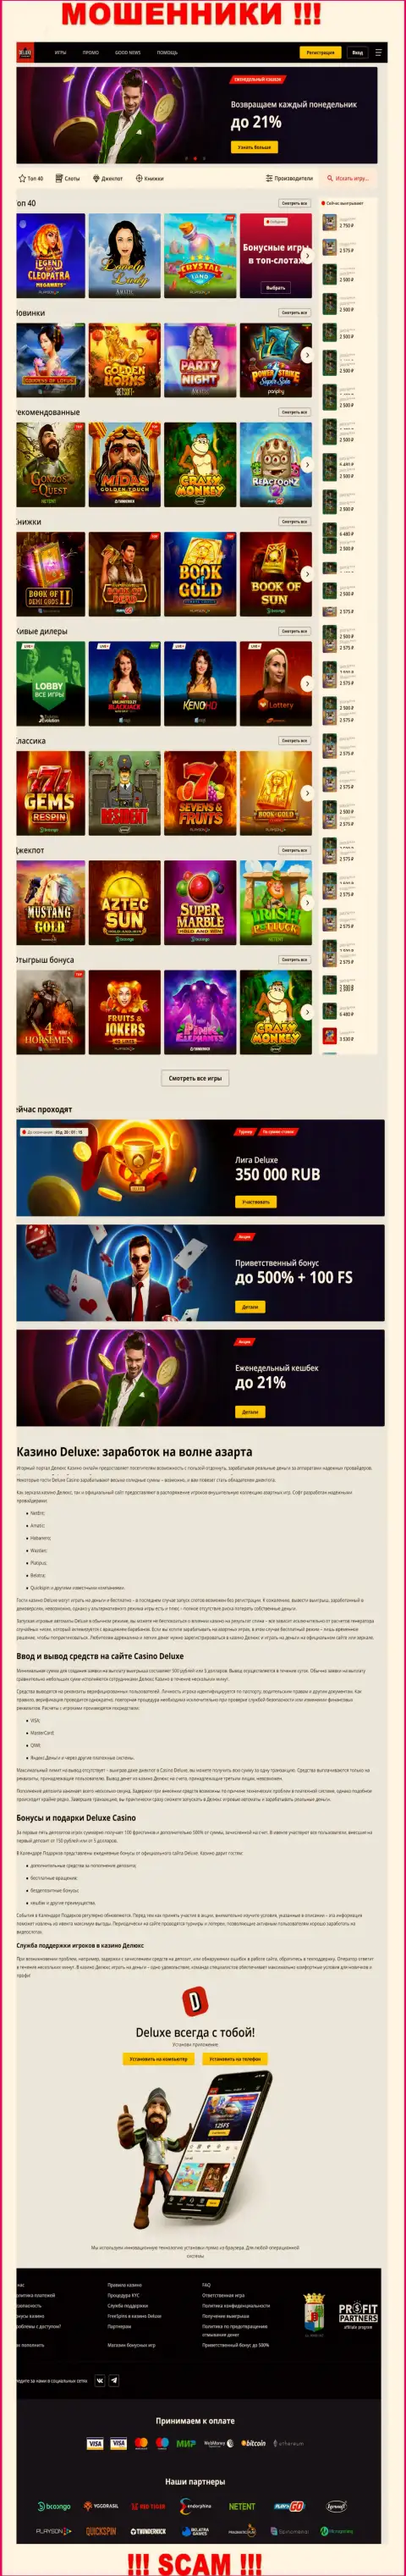 Официальная онлайн-страница организации Deluxe Casino